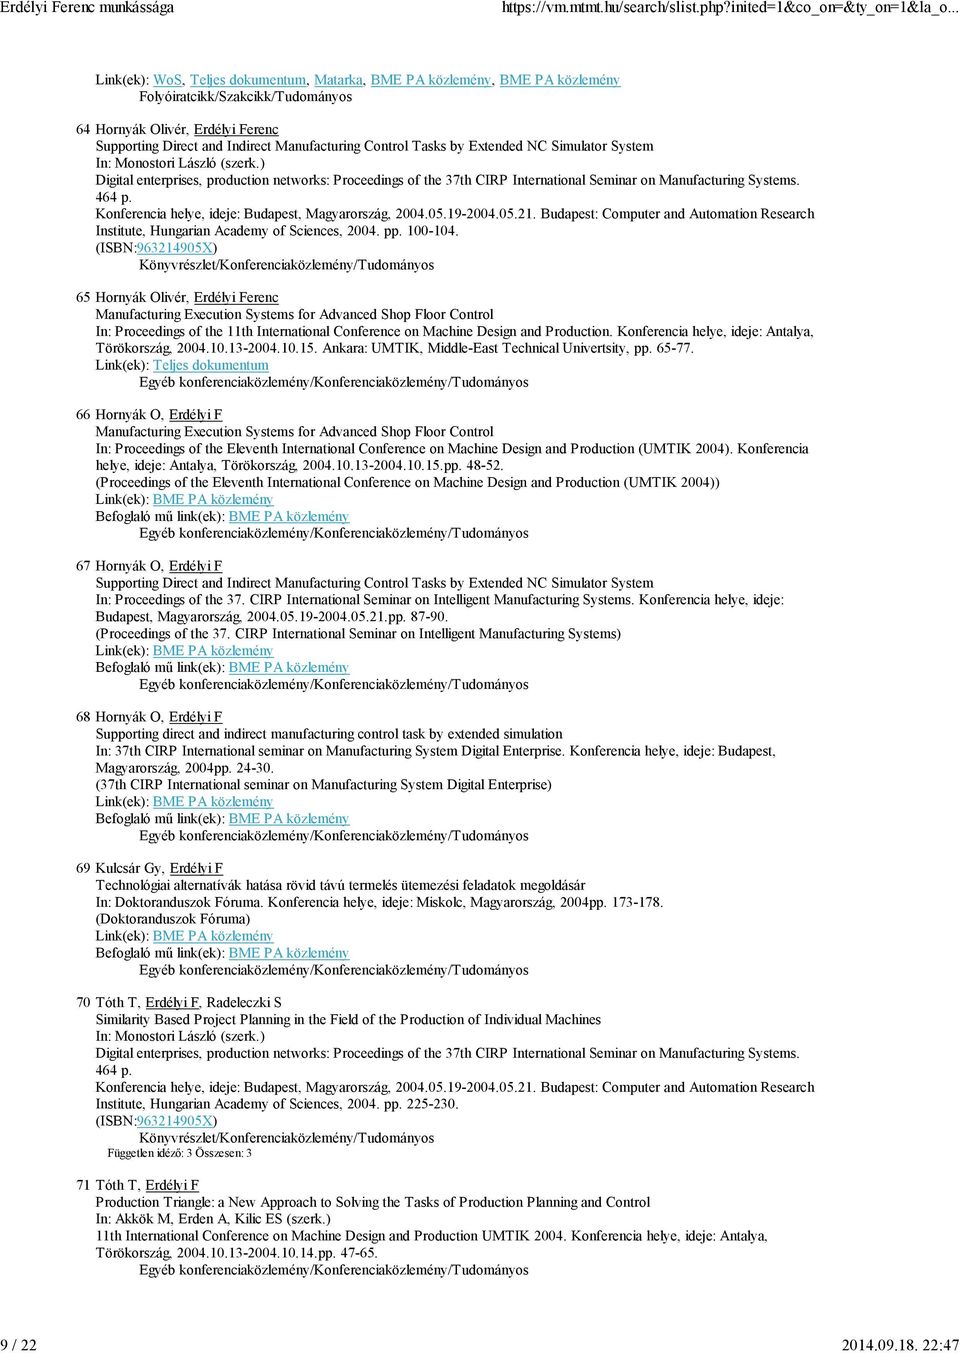 Simulator System In: Monostori László (szerk.) Digital enterprises, production networks: Proceedings of the 37th CIRP International Seminar on Manufacturing Systems. 464 p.